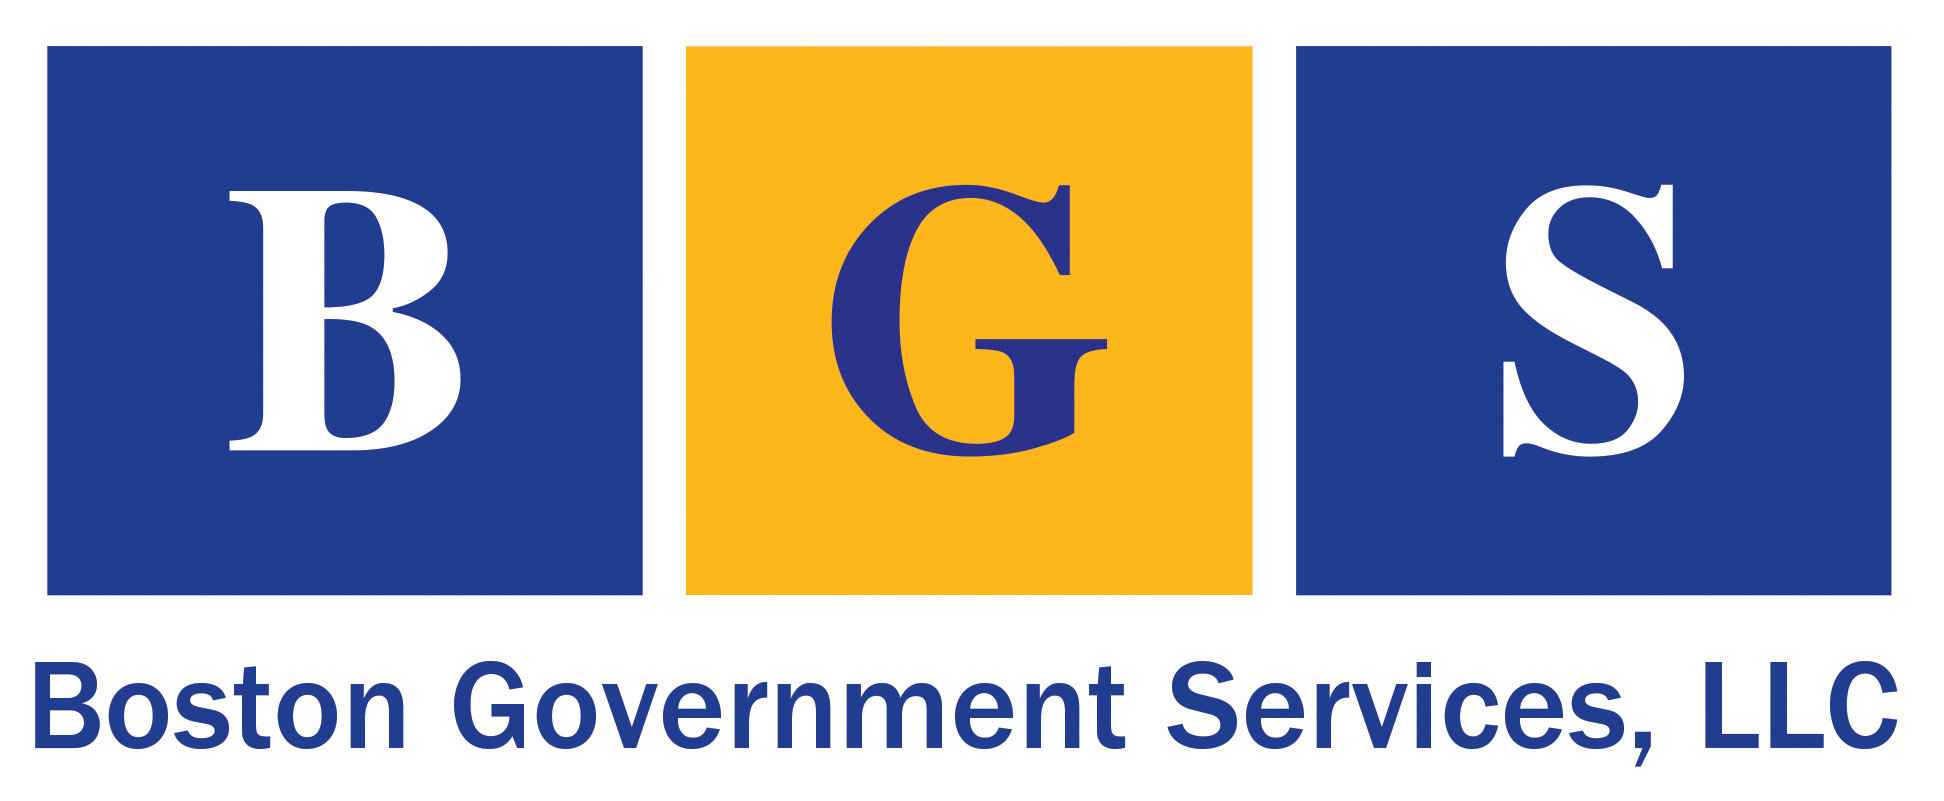 BGS logo (new 11-13).jpg